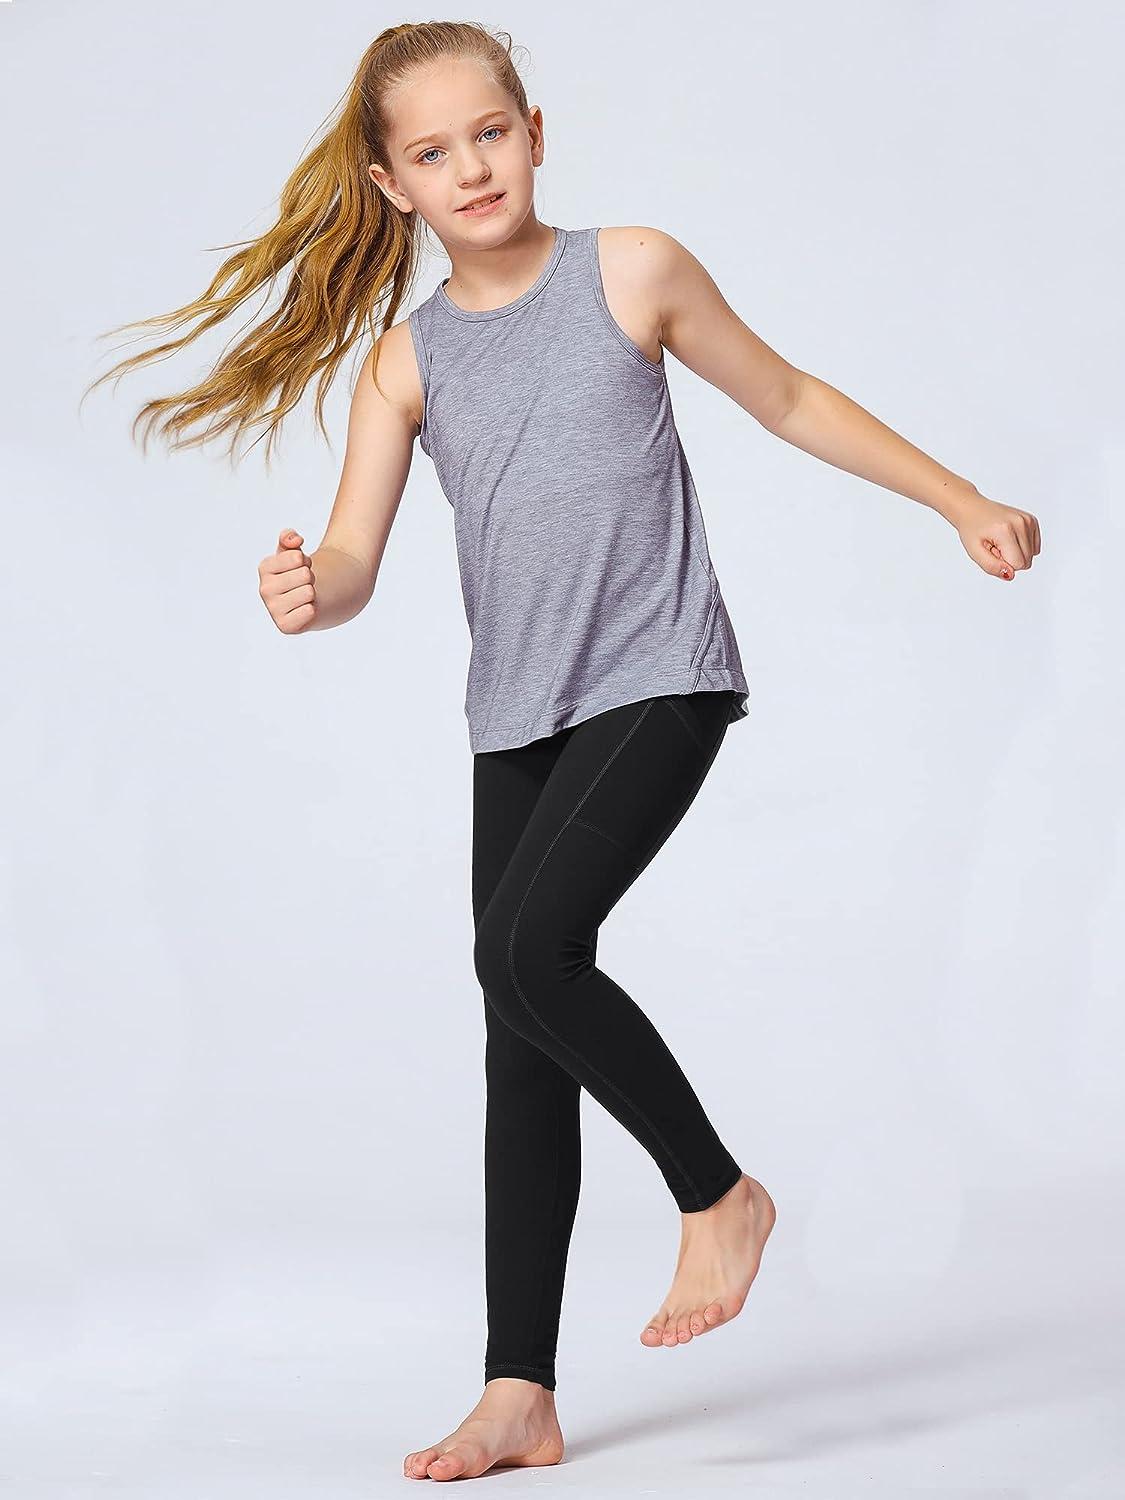 Stelle Girls Athletic Leggings Kids Dance Workout Running Yoga Pants with  Hidden Pocket